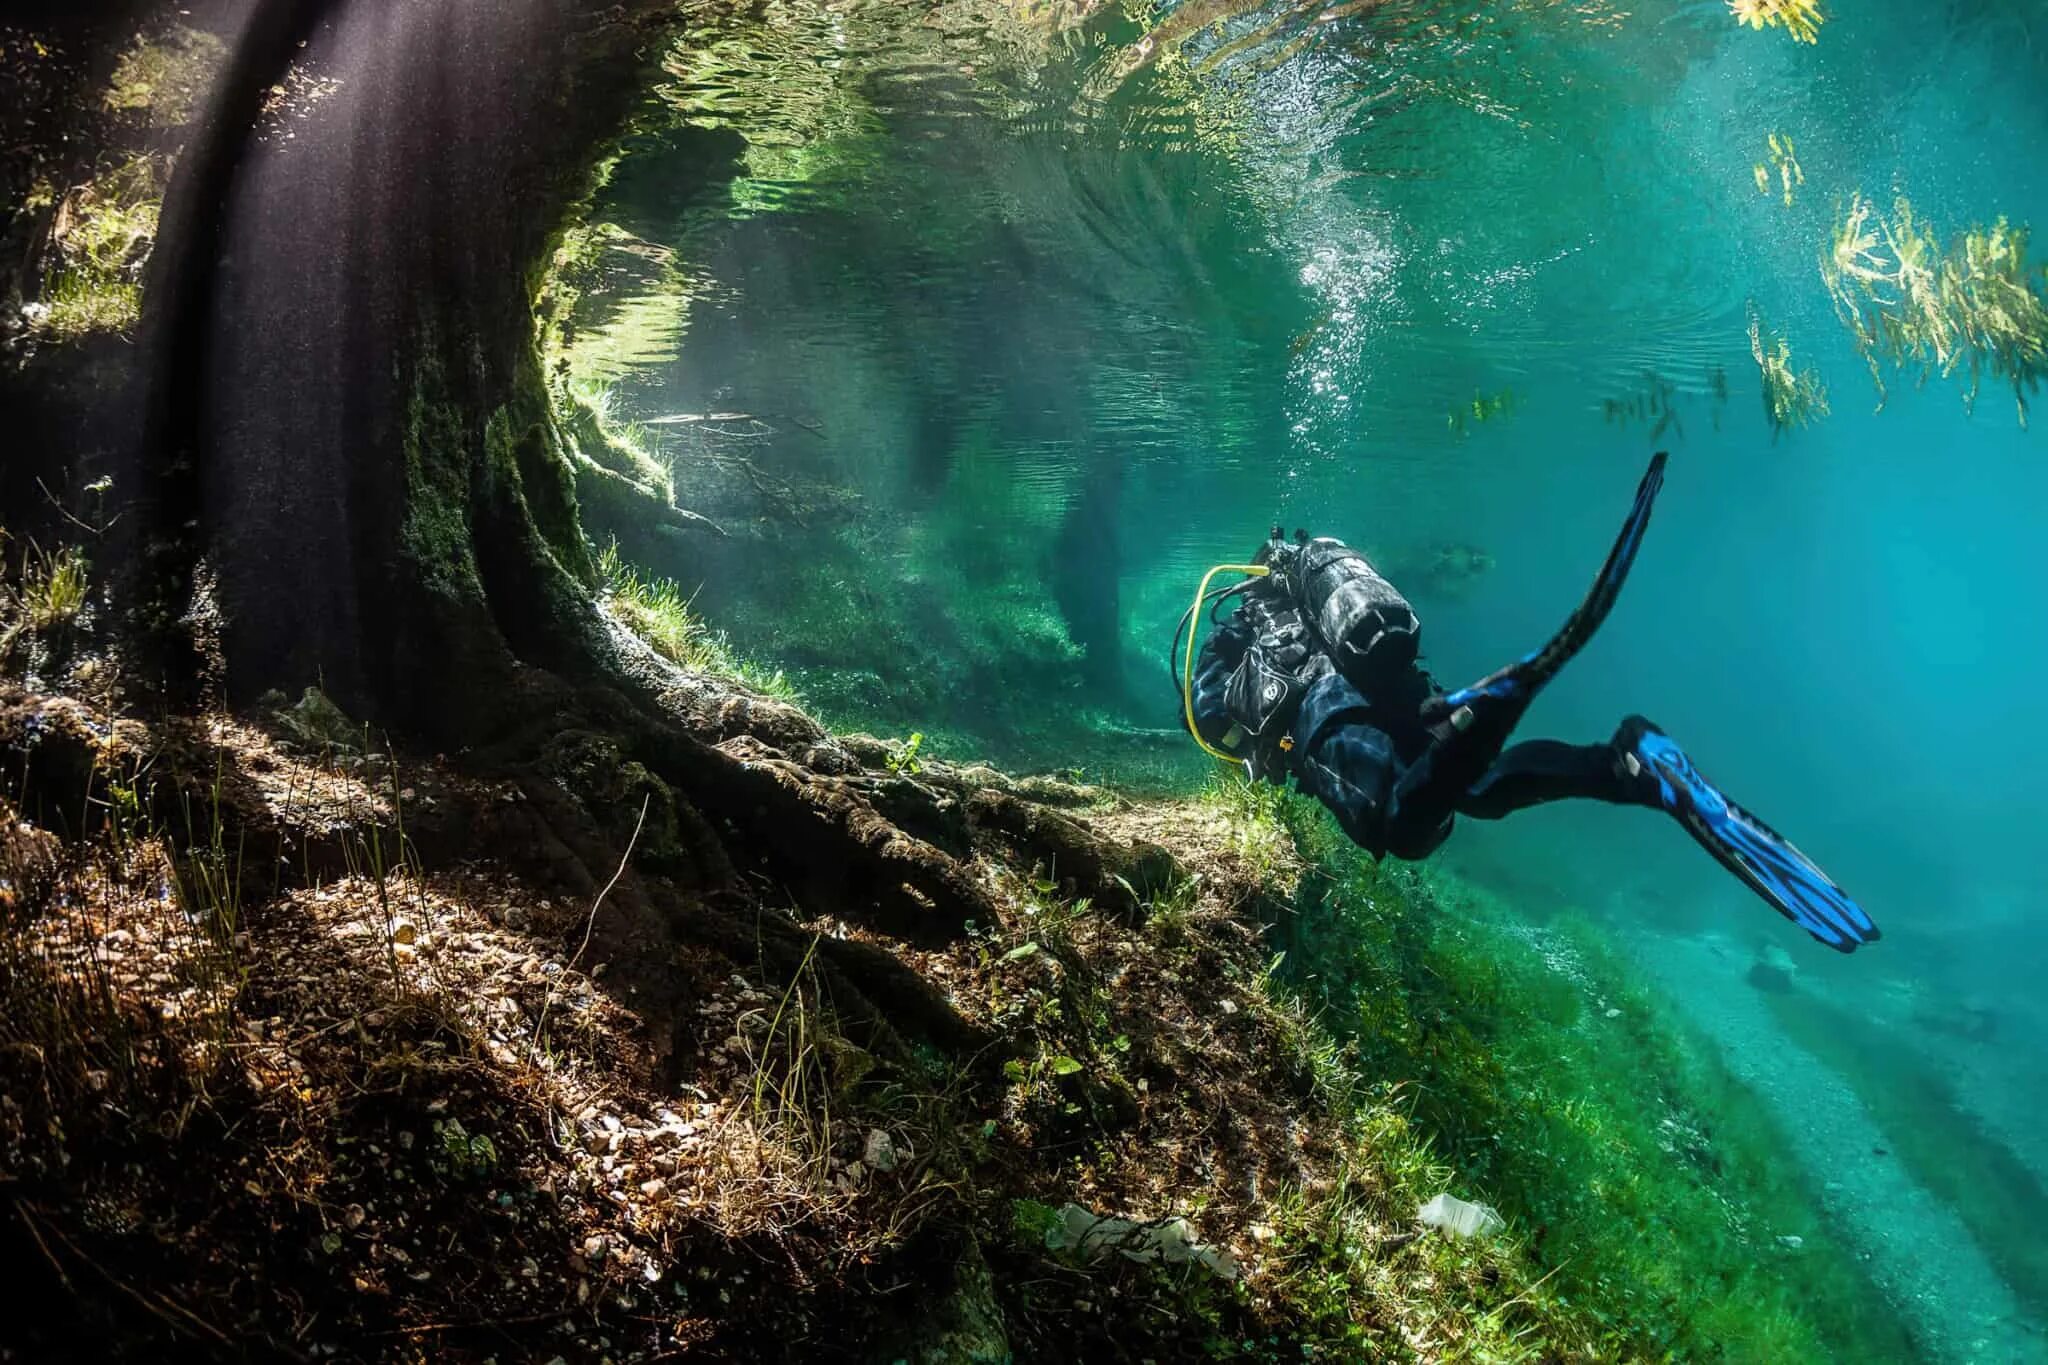 15 про под водой. Зеленое озеро Грюнер Зее. Австрия озеро парк Грюнер. Австрия зеленое озеро подводный парк. Сенот Ангелита Мексика.